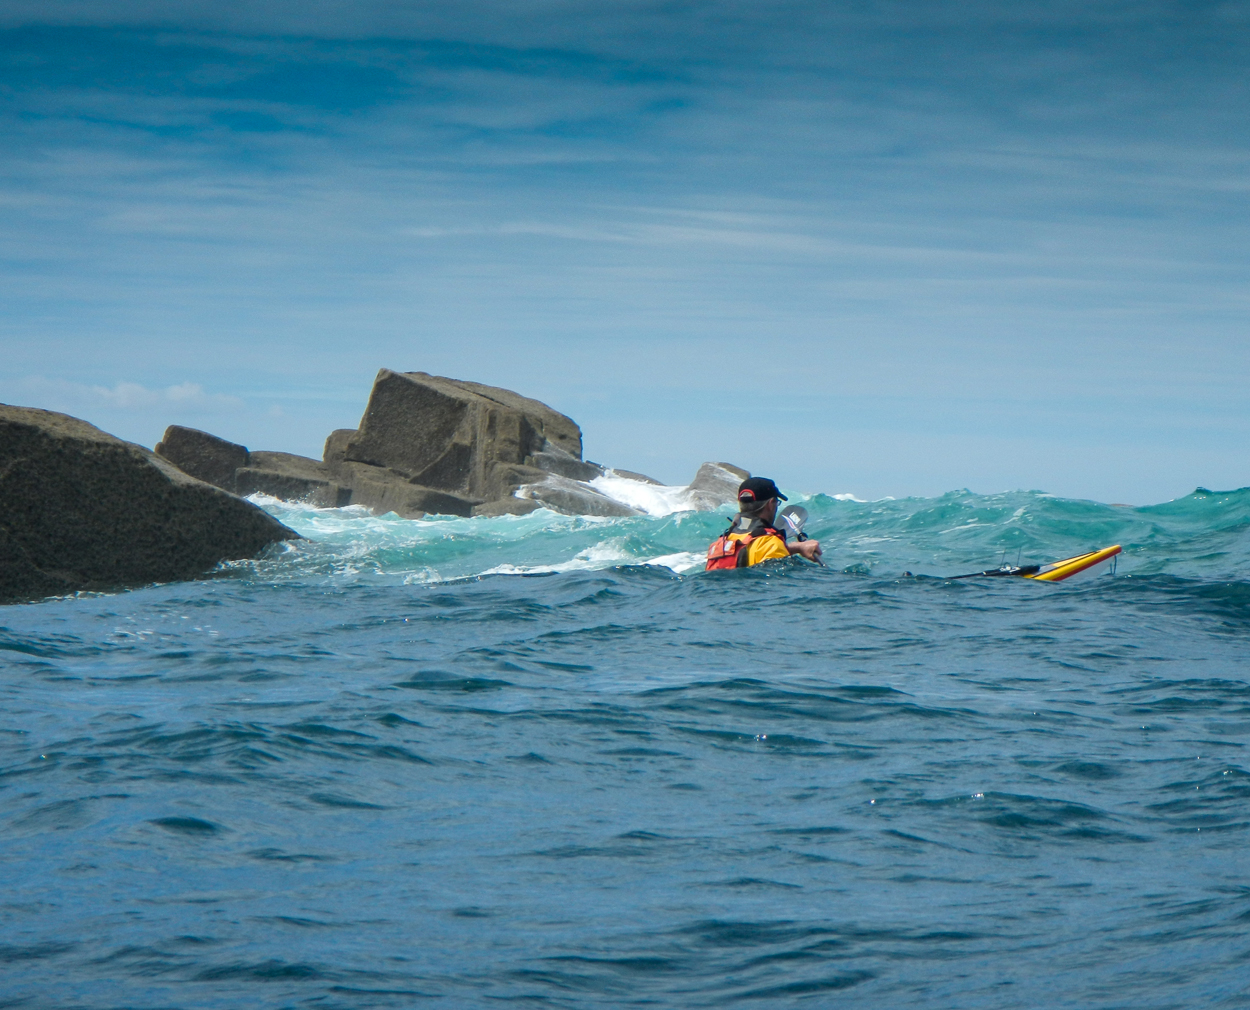 In biggish seas - Sea kayaking at its best...!